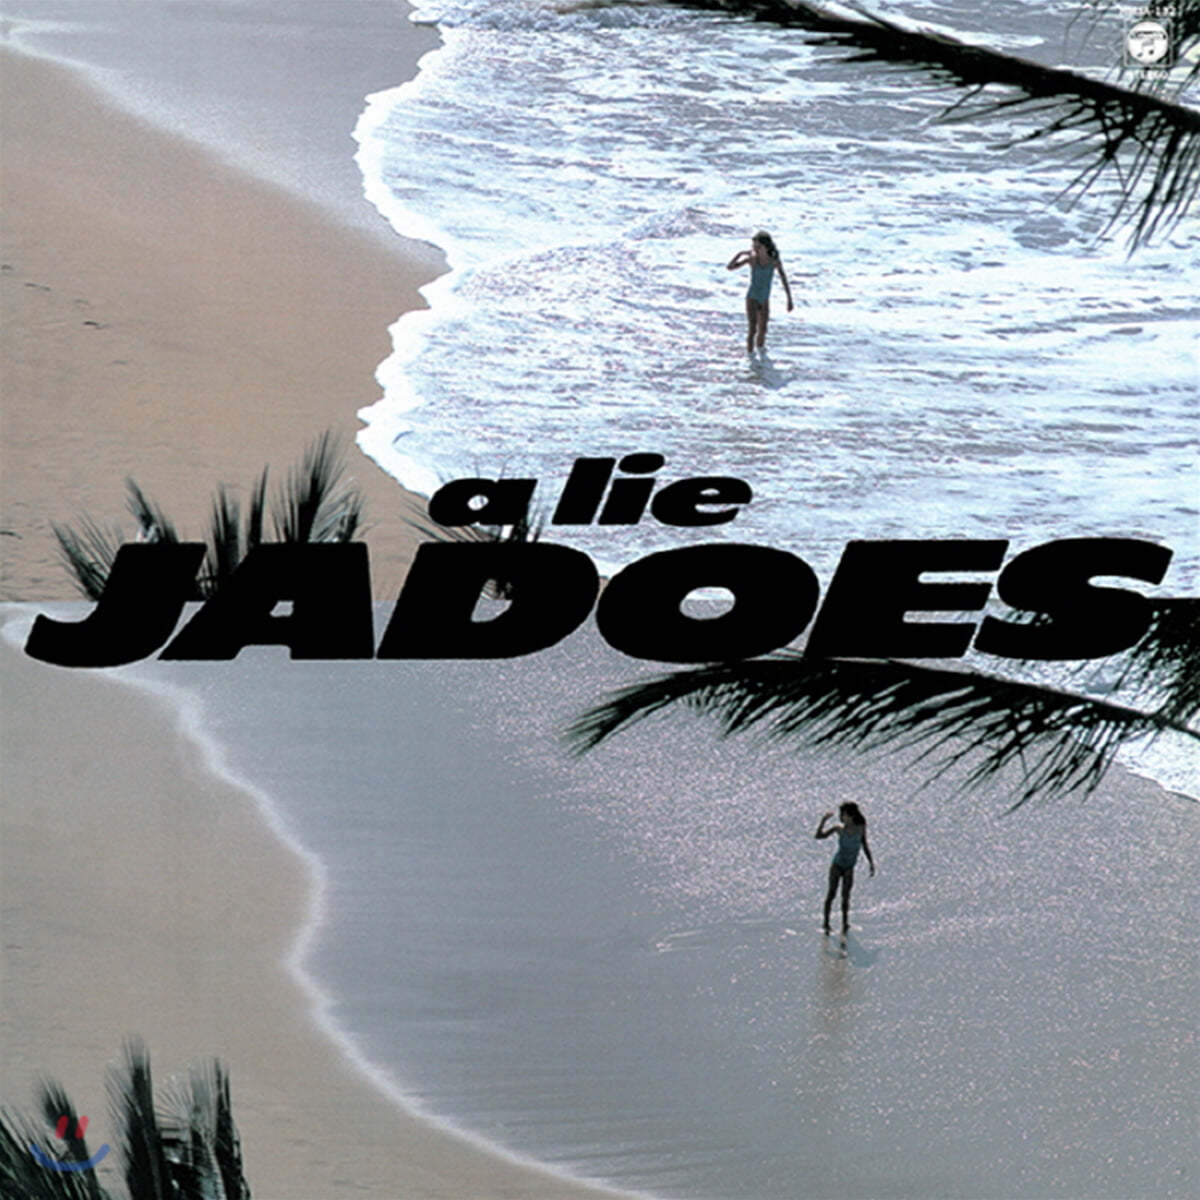 Jadoes - A Lie [LP] 